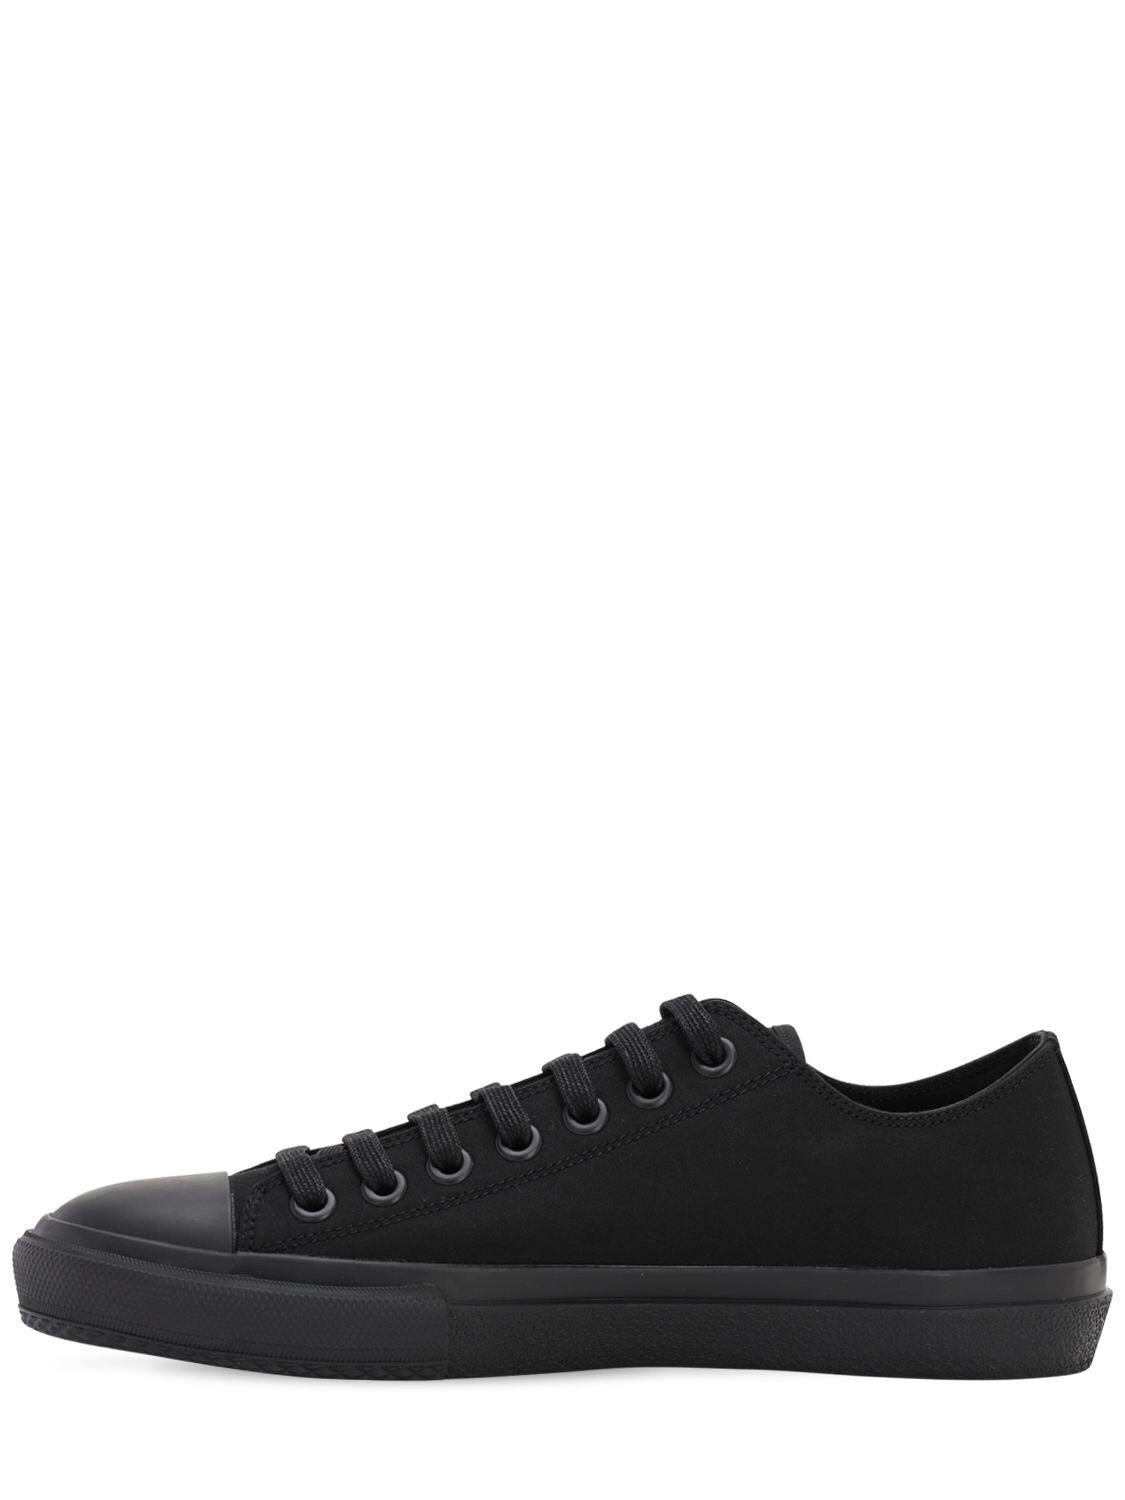 Burberry Contrast Logo Print Sneakers in Black for Men | Lyst